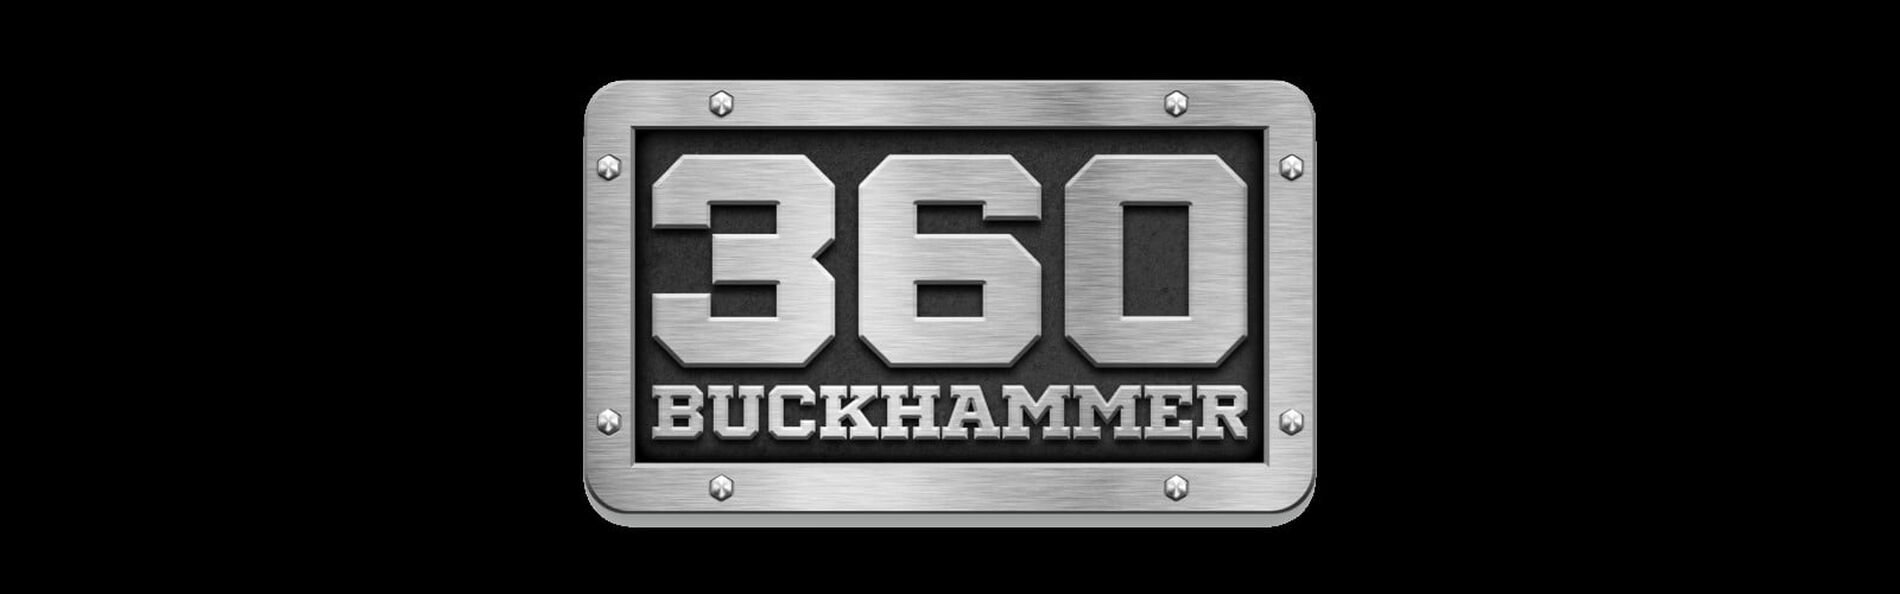 360 Buckhammer Logo on a black background